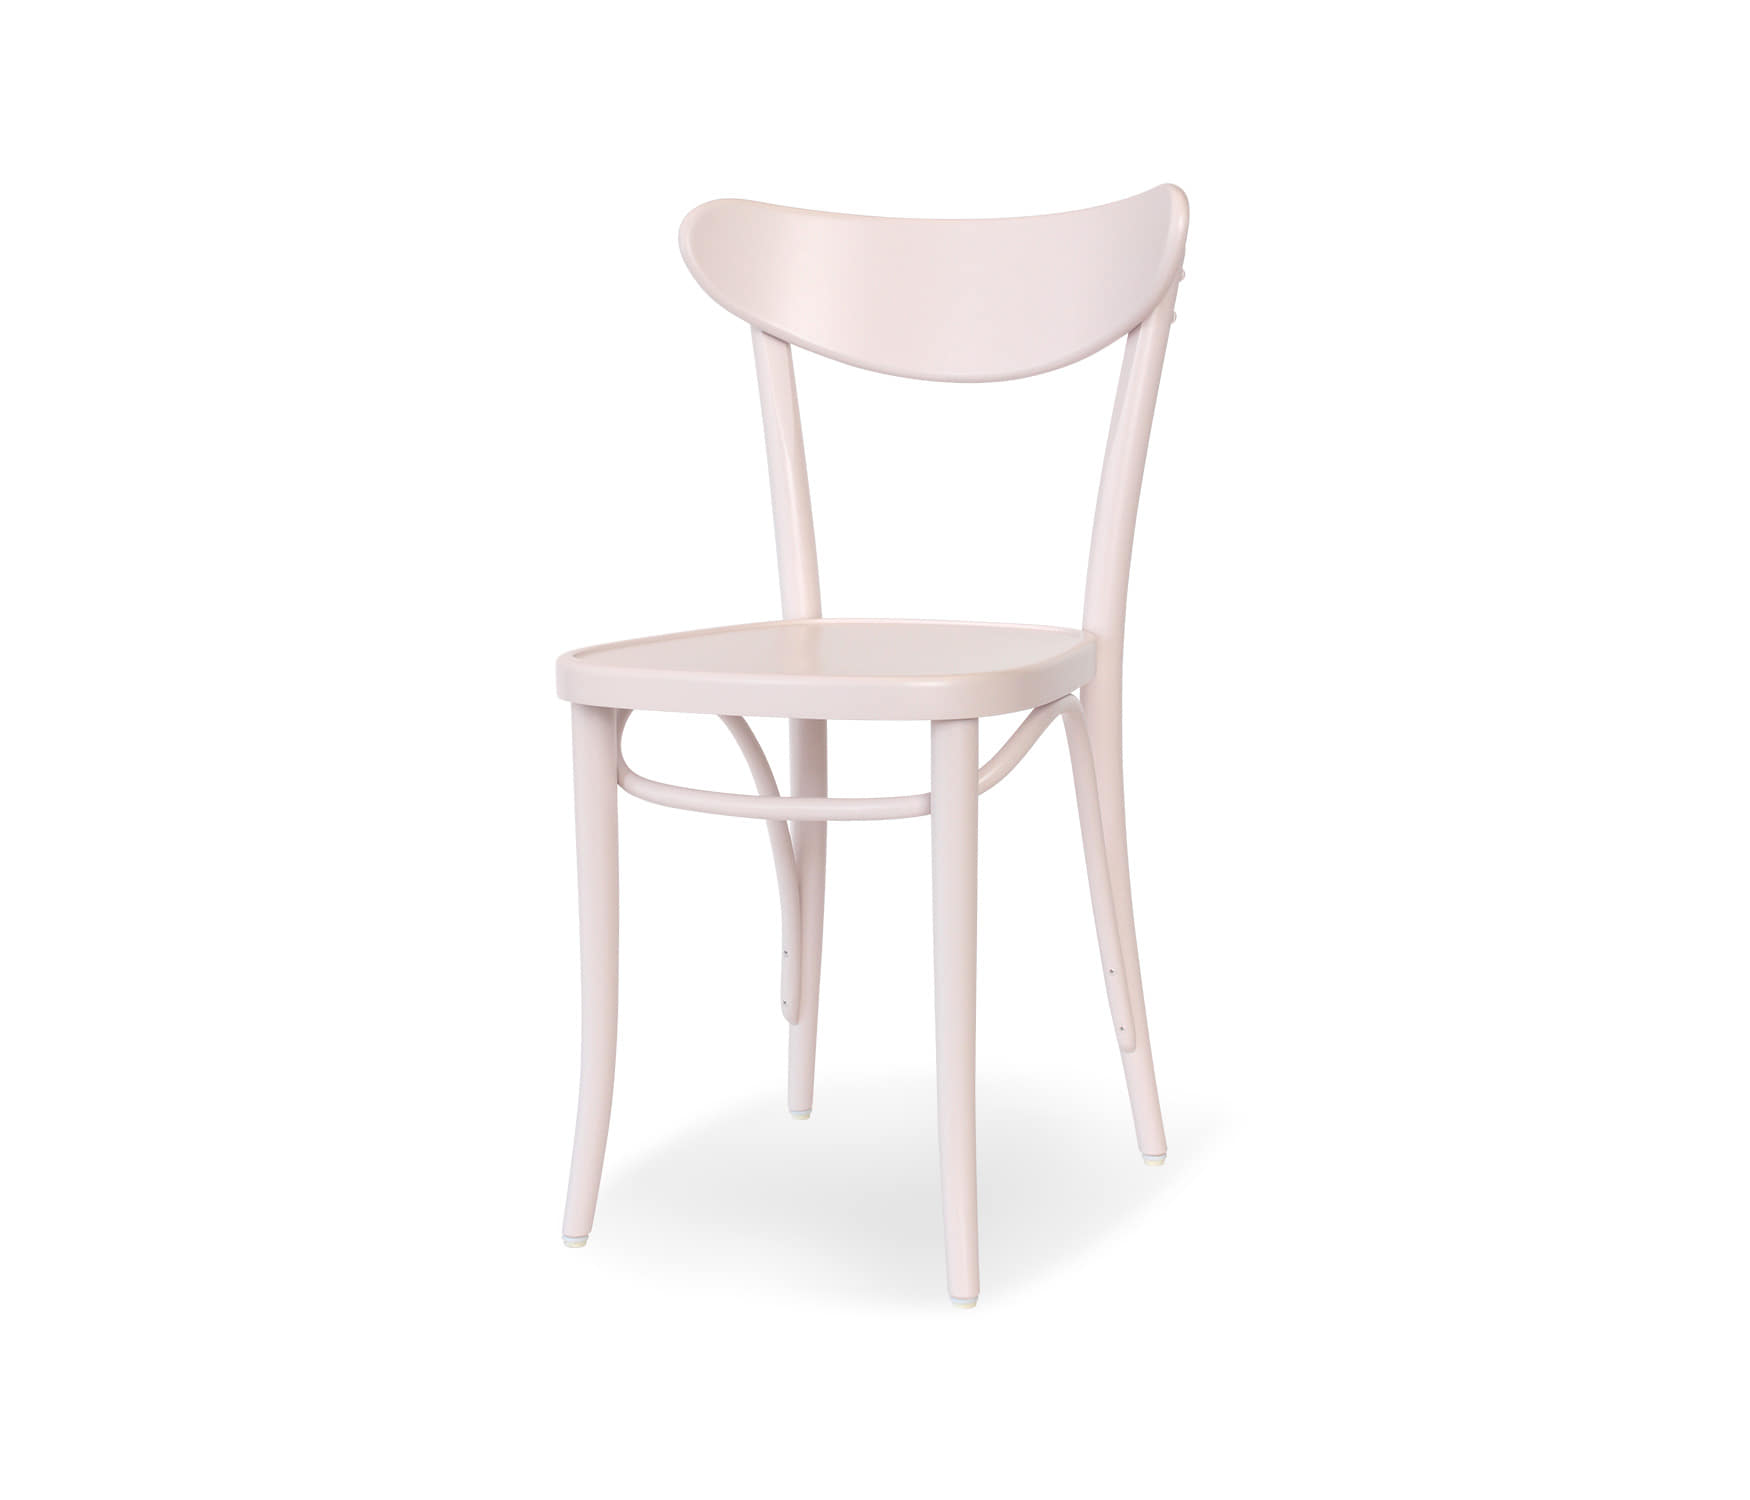 Chair Banana - Nude Pink